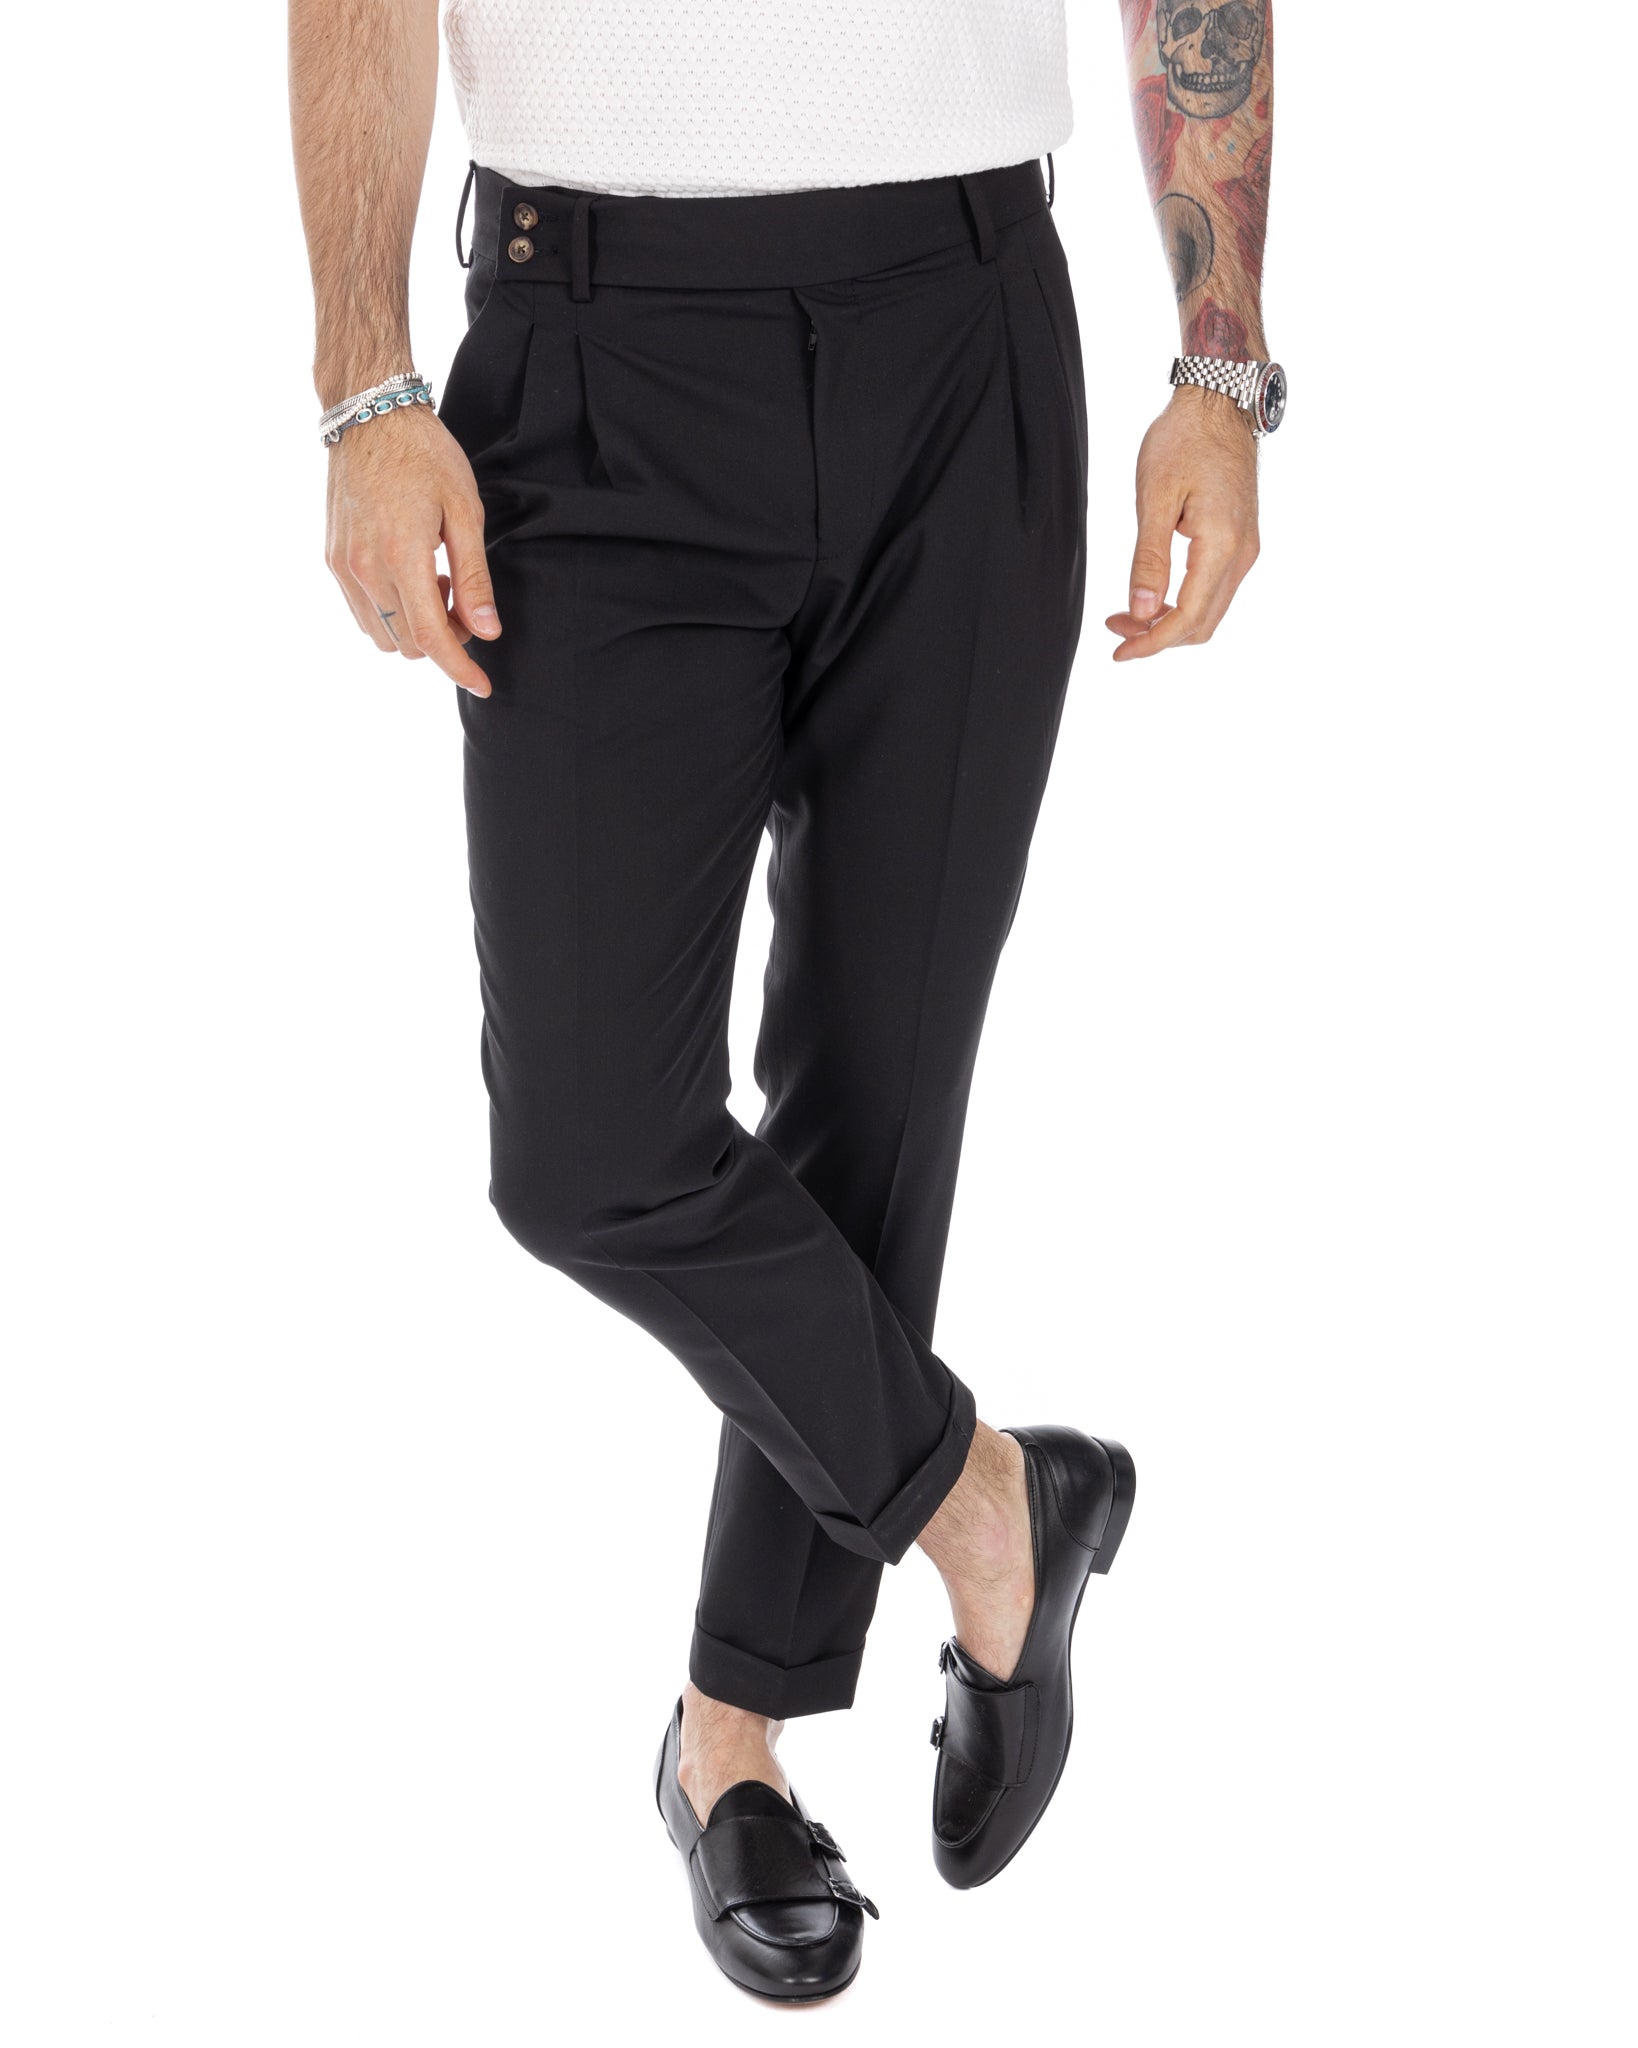 Caprera - black high waisted trousers